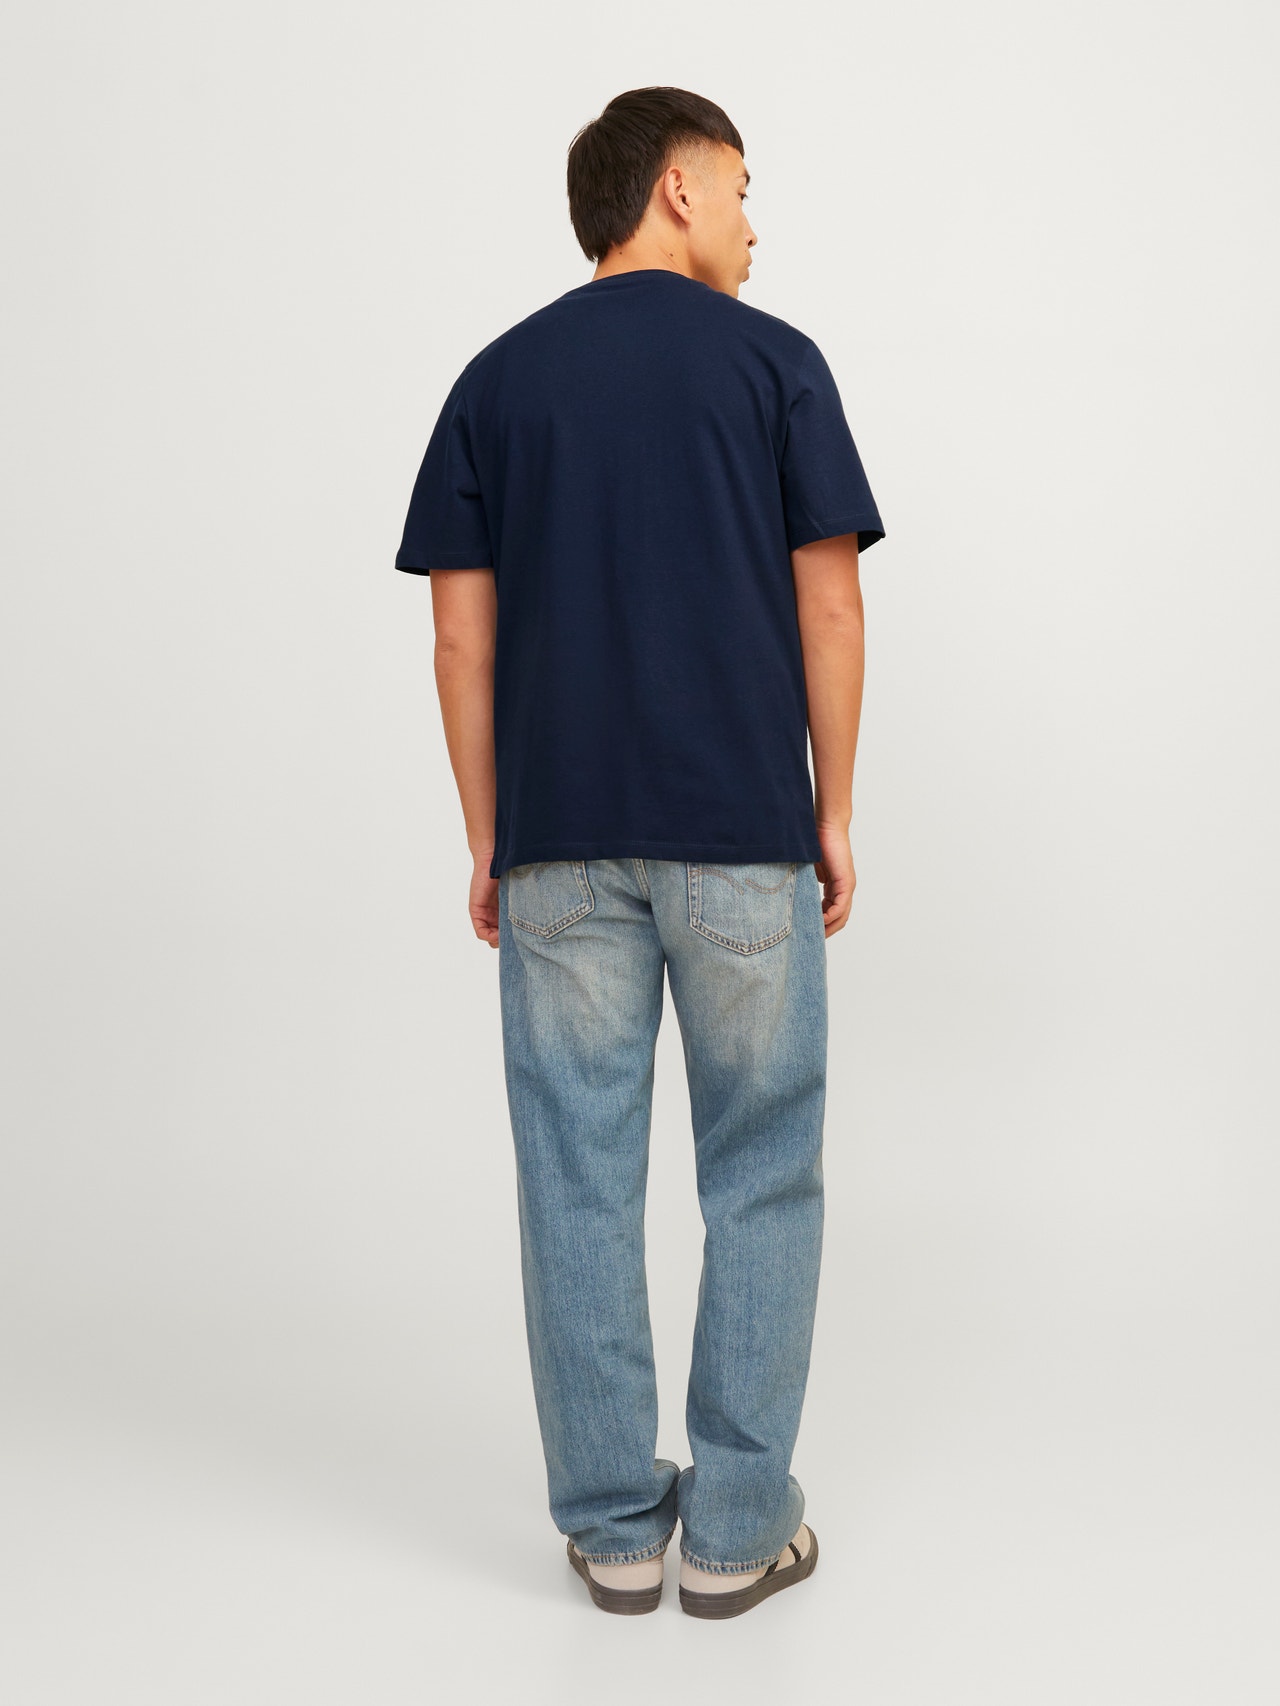 Jack & Jones T-shirt Estampar Decote Redondo -Navy Blazer - 12255078